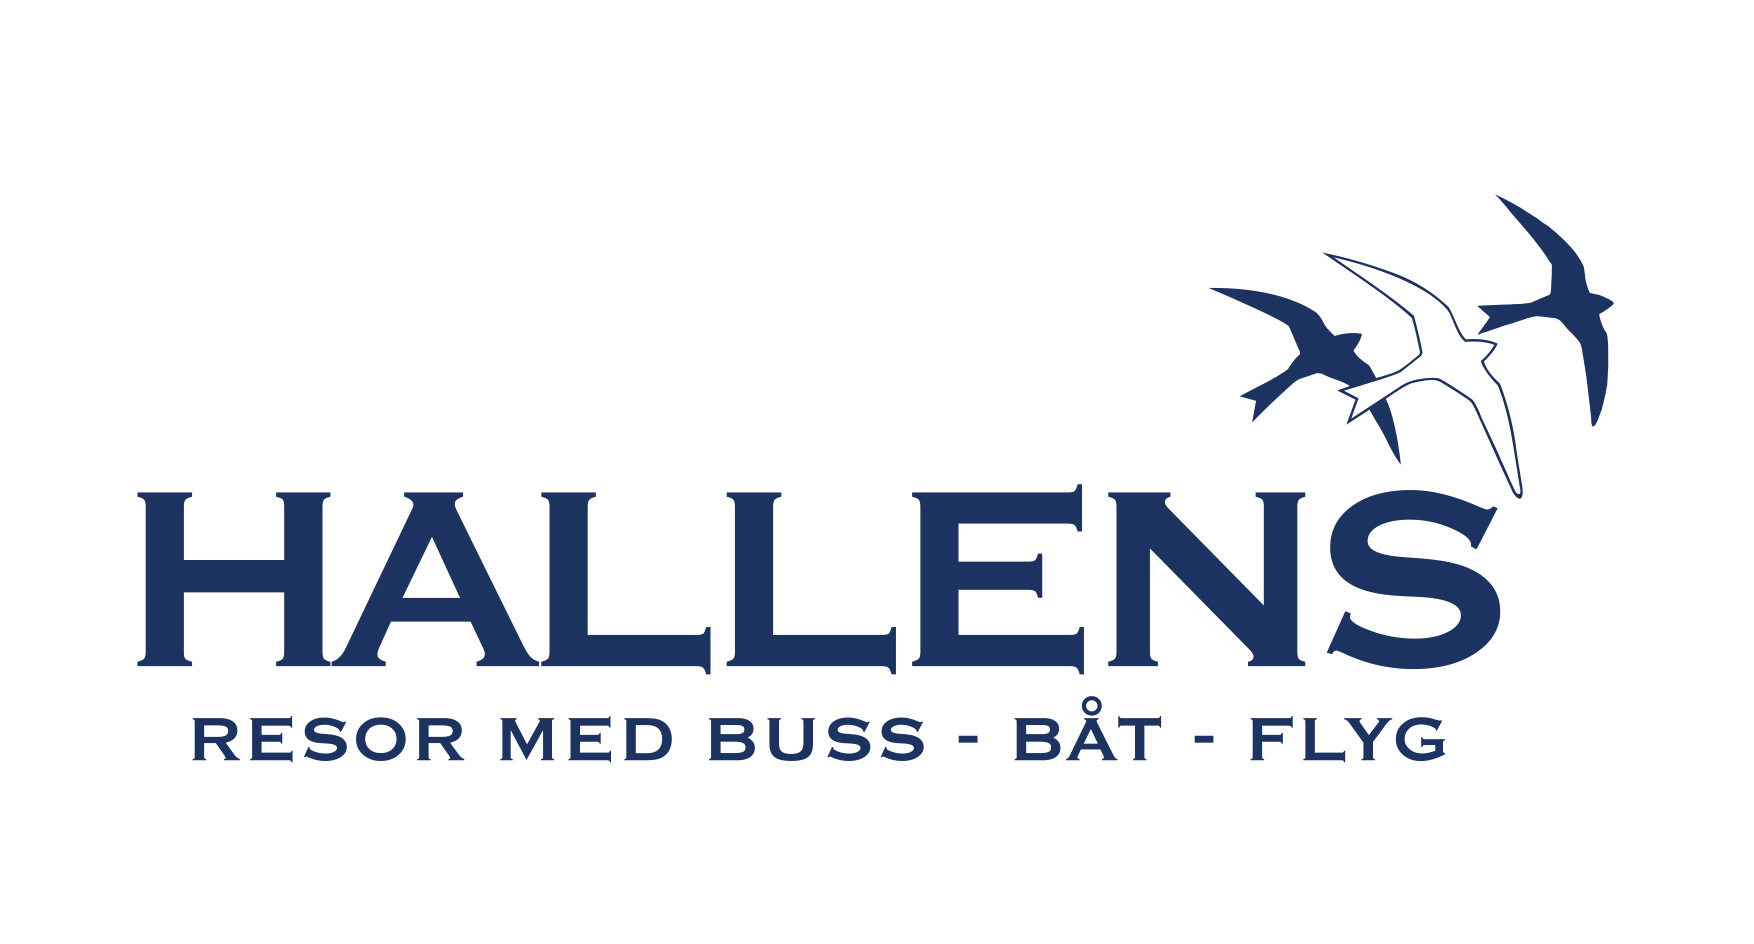 Hallensbuss logo - Resor med buss, båt, flyg_BLUE_WHITE BIRD